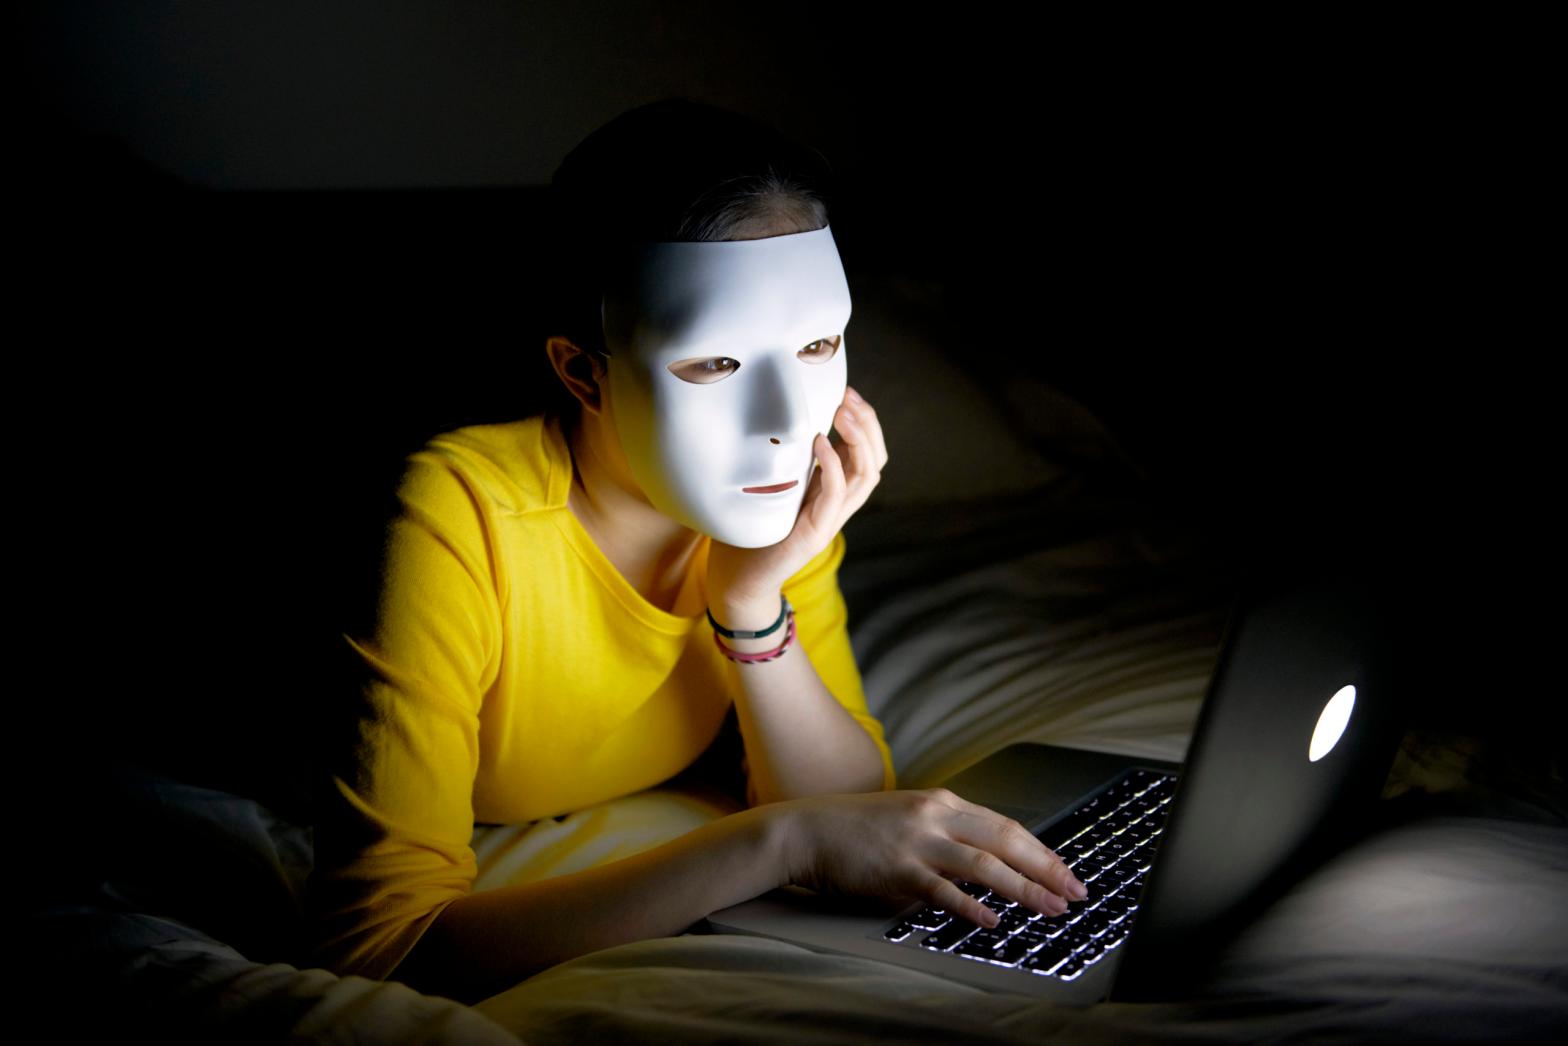 online anonymity